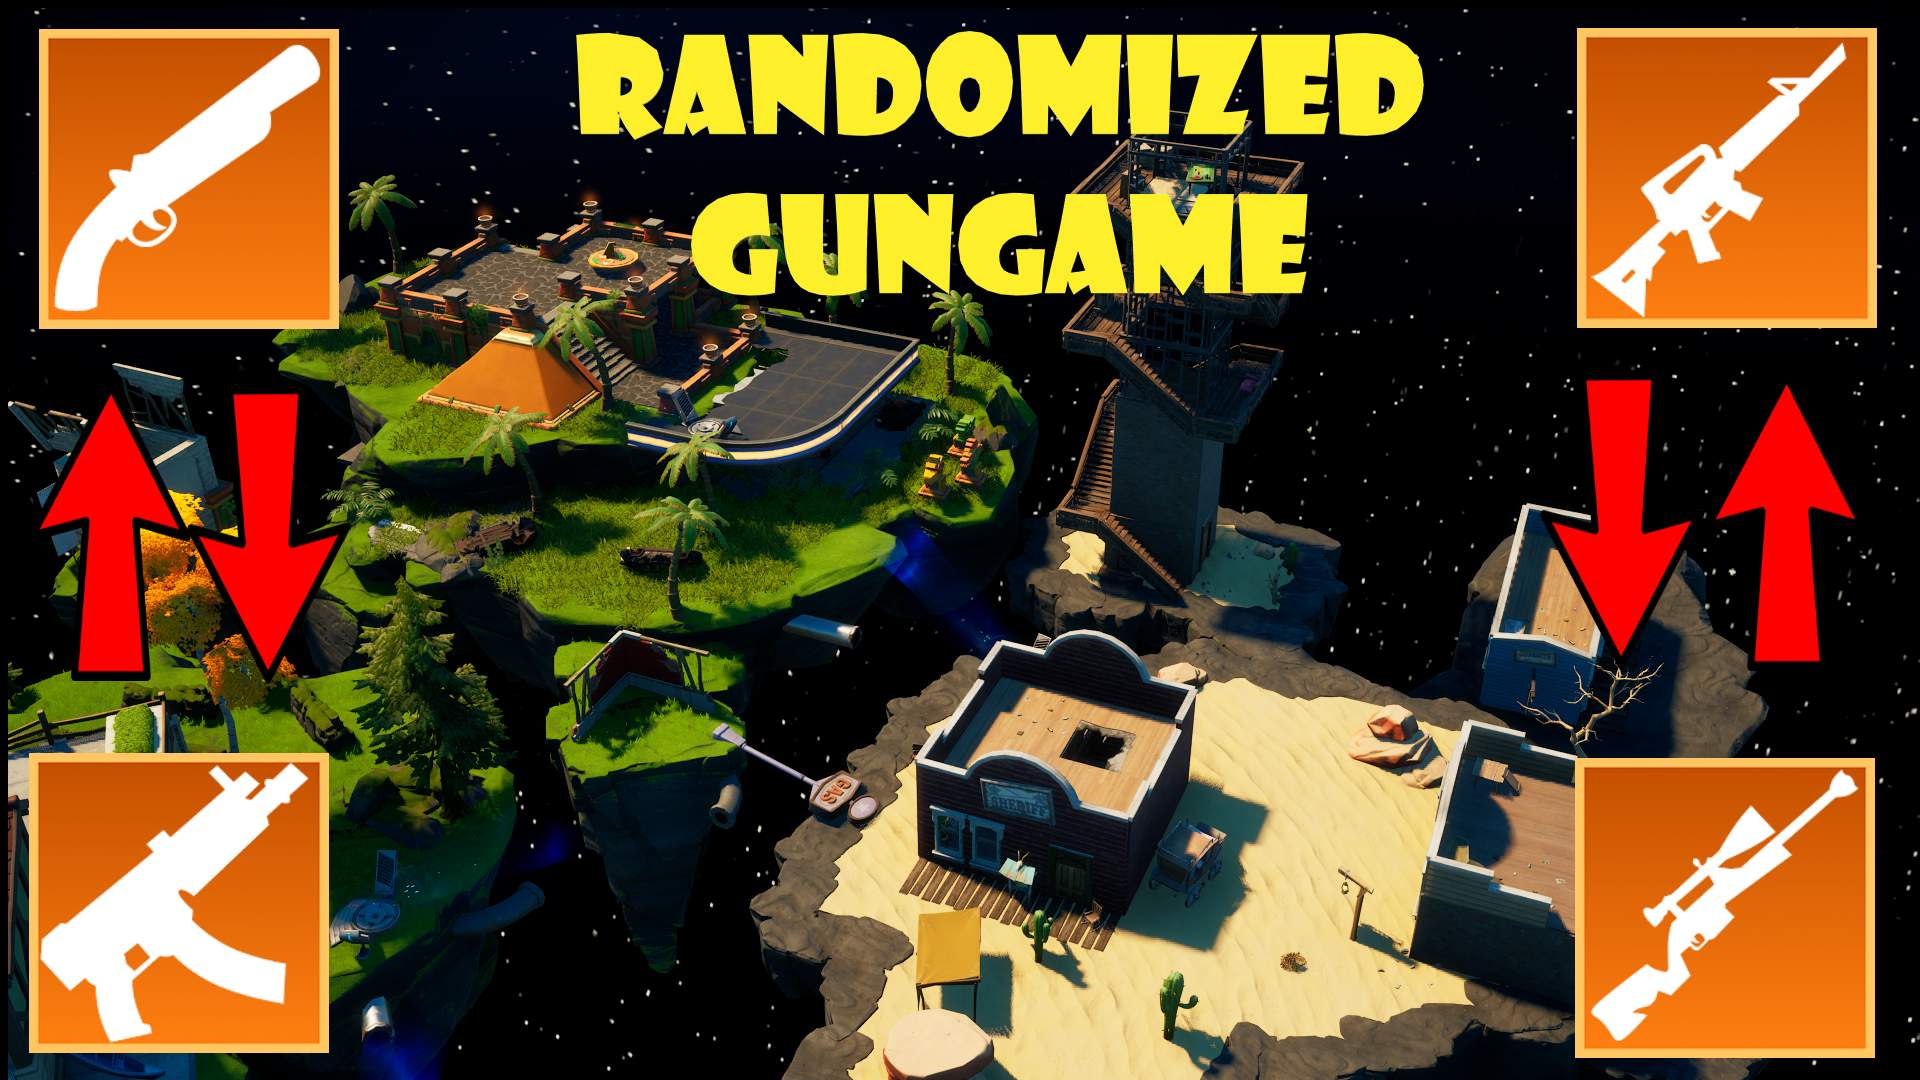 Randomized Gungame I Rifted Reality